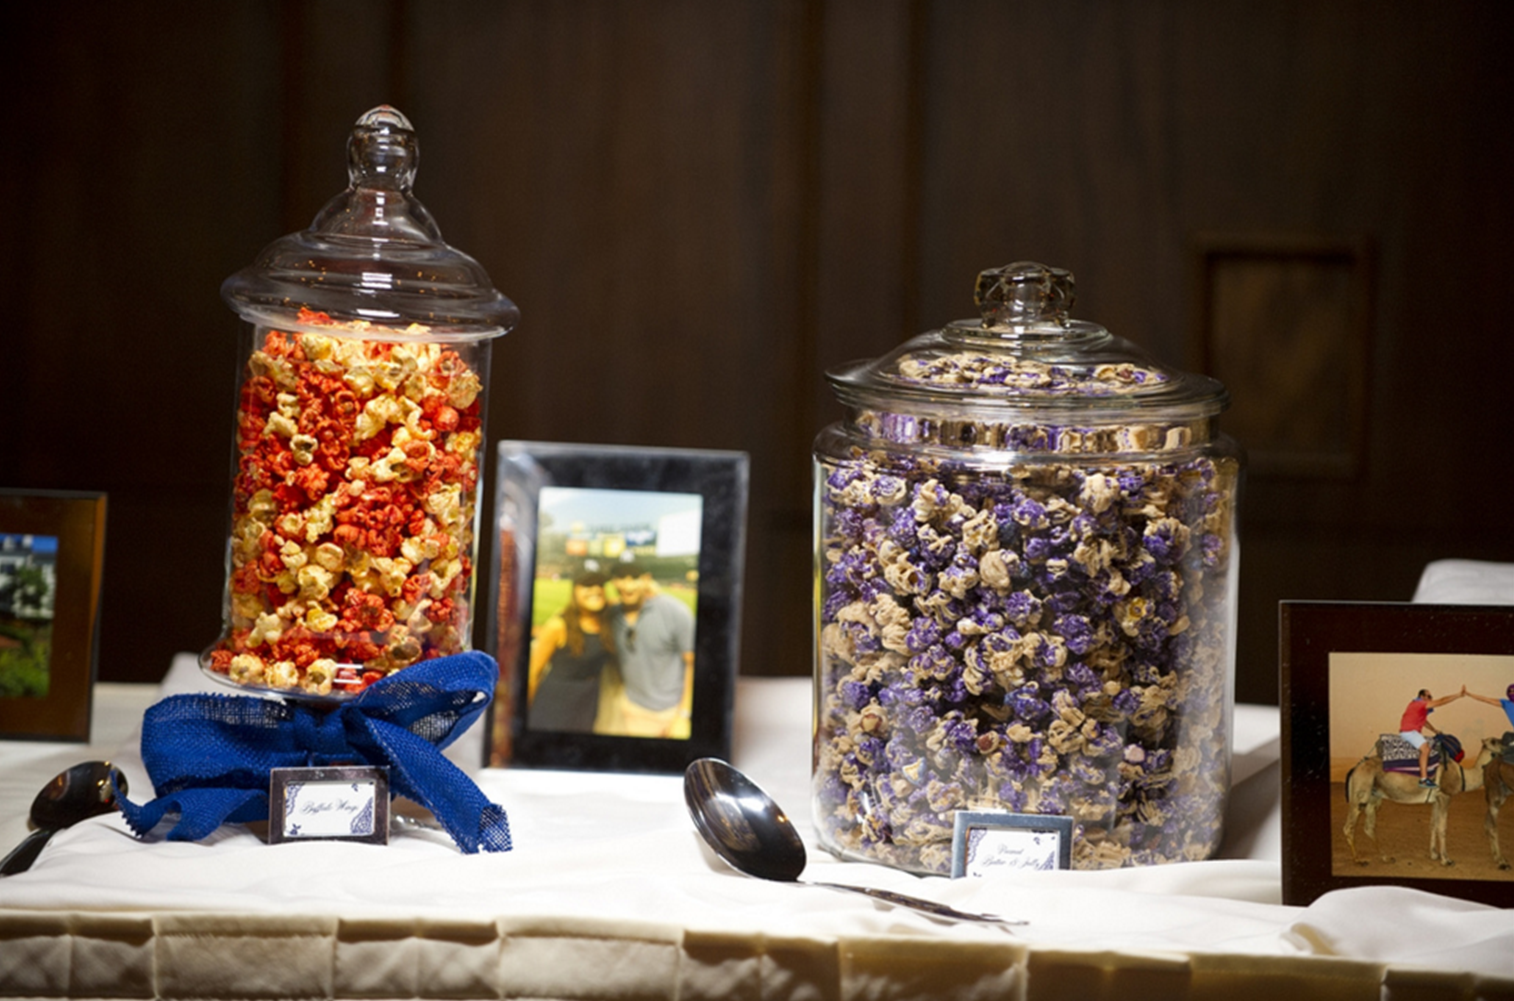 Wedding Reception Popcorn Bar